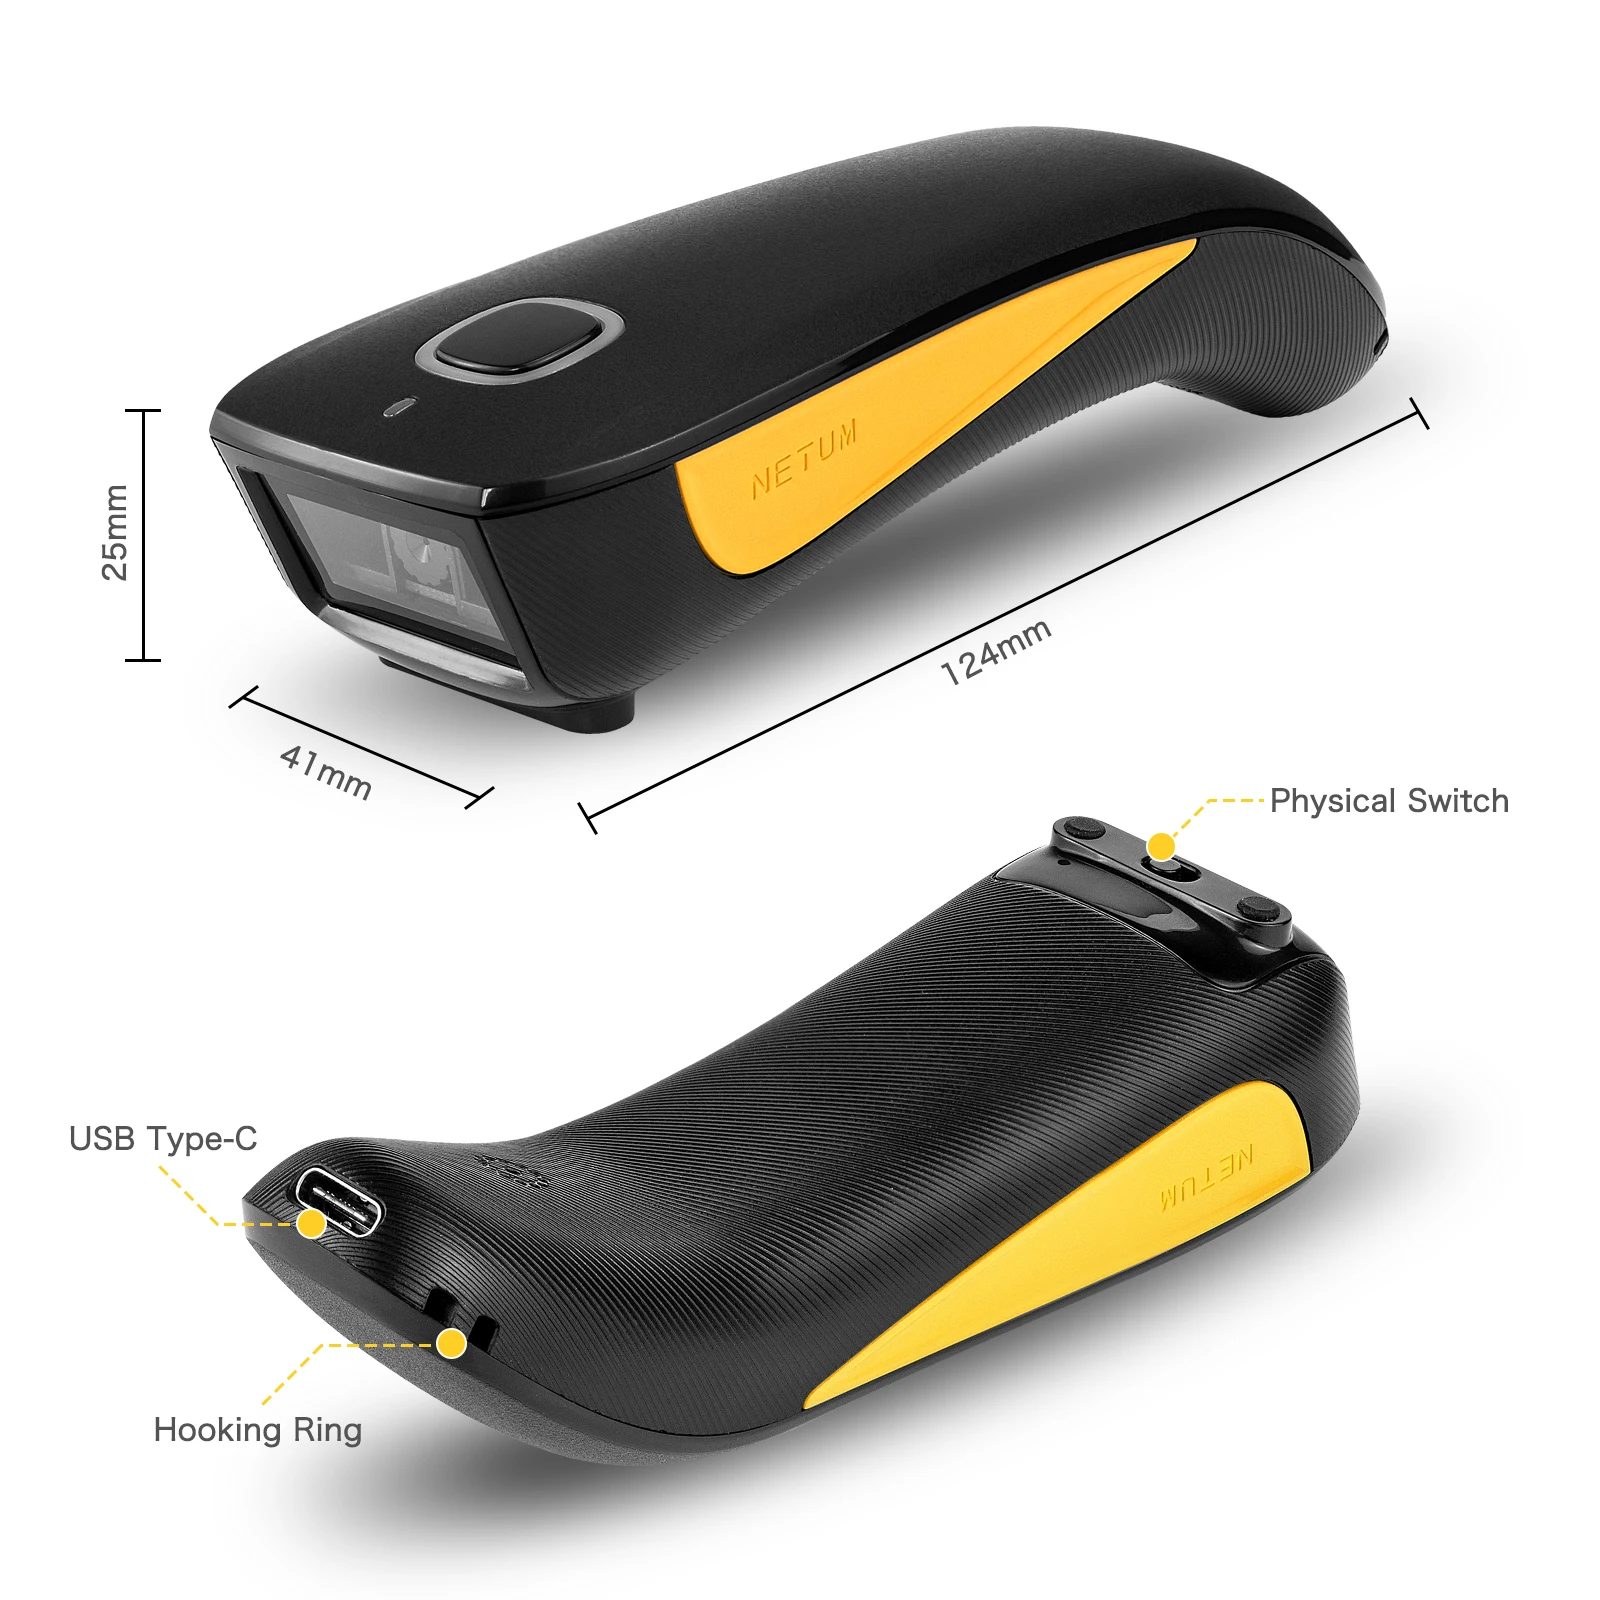 

NETUM C740 C750 Factory Cheap Price 1D 2D Pocket Wireless Portable Scanners bt Barcode Scanner